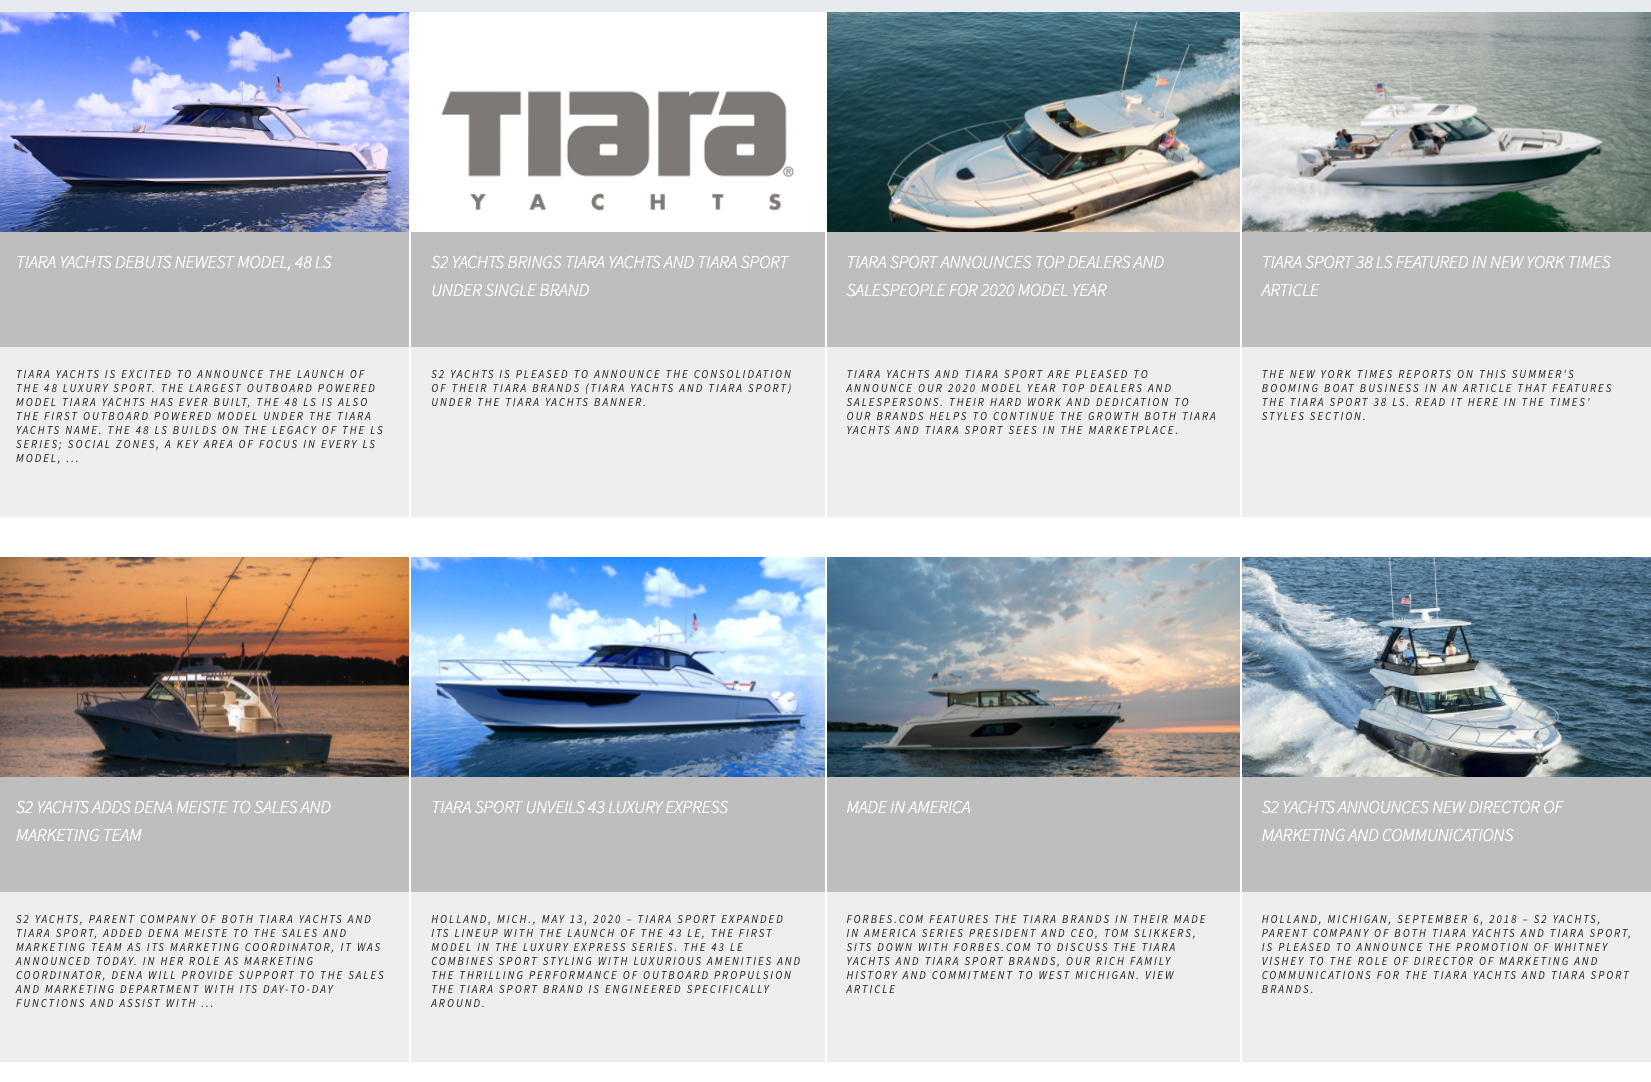 Tiara yachts-image 3